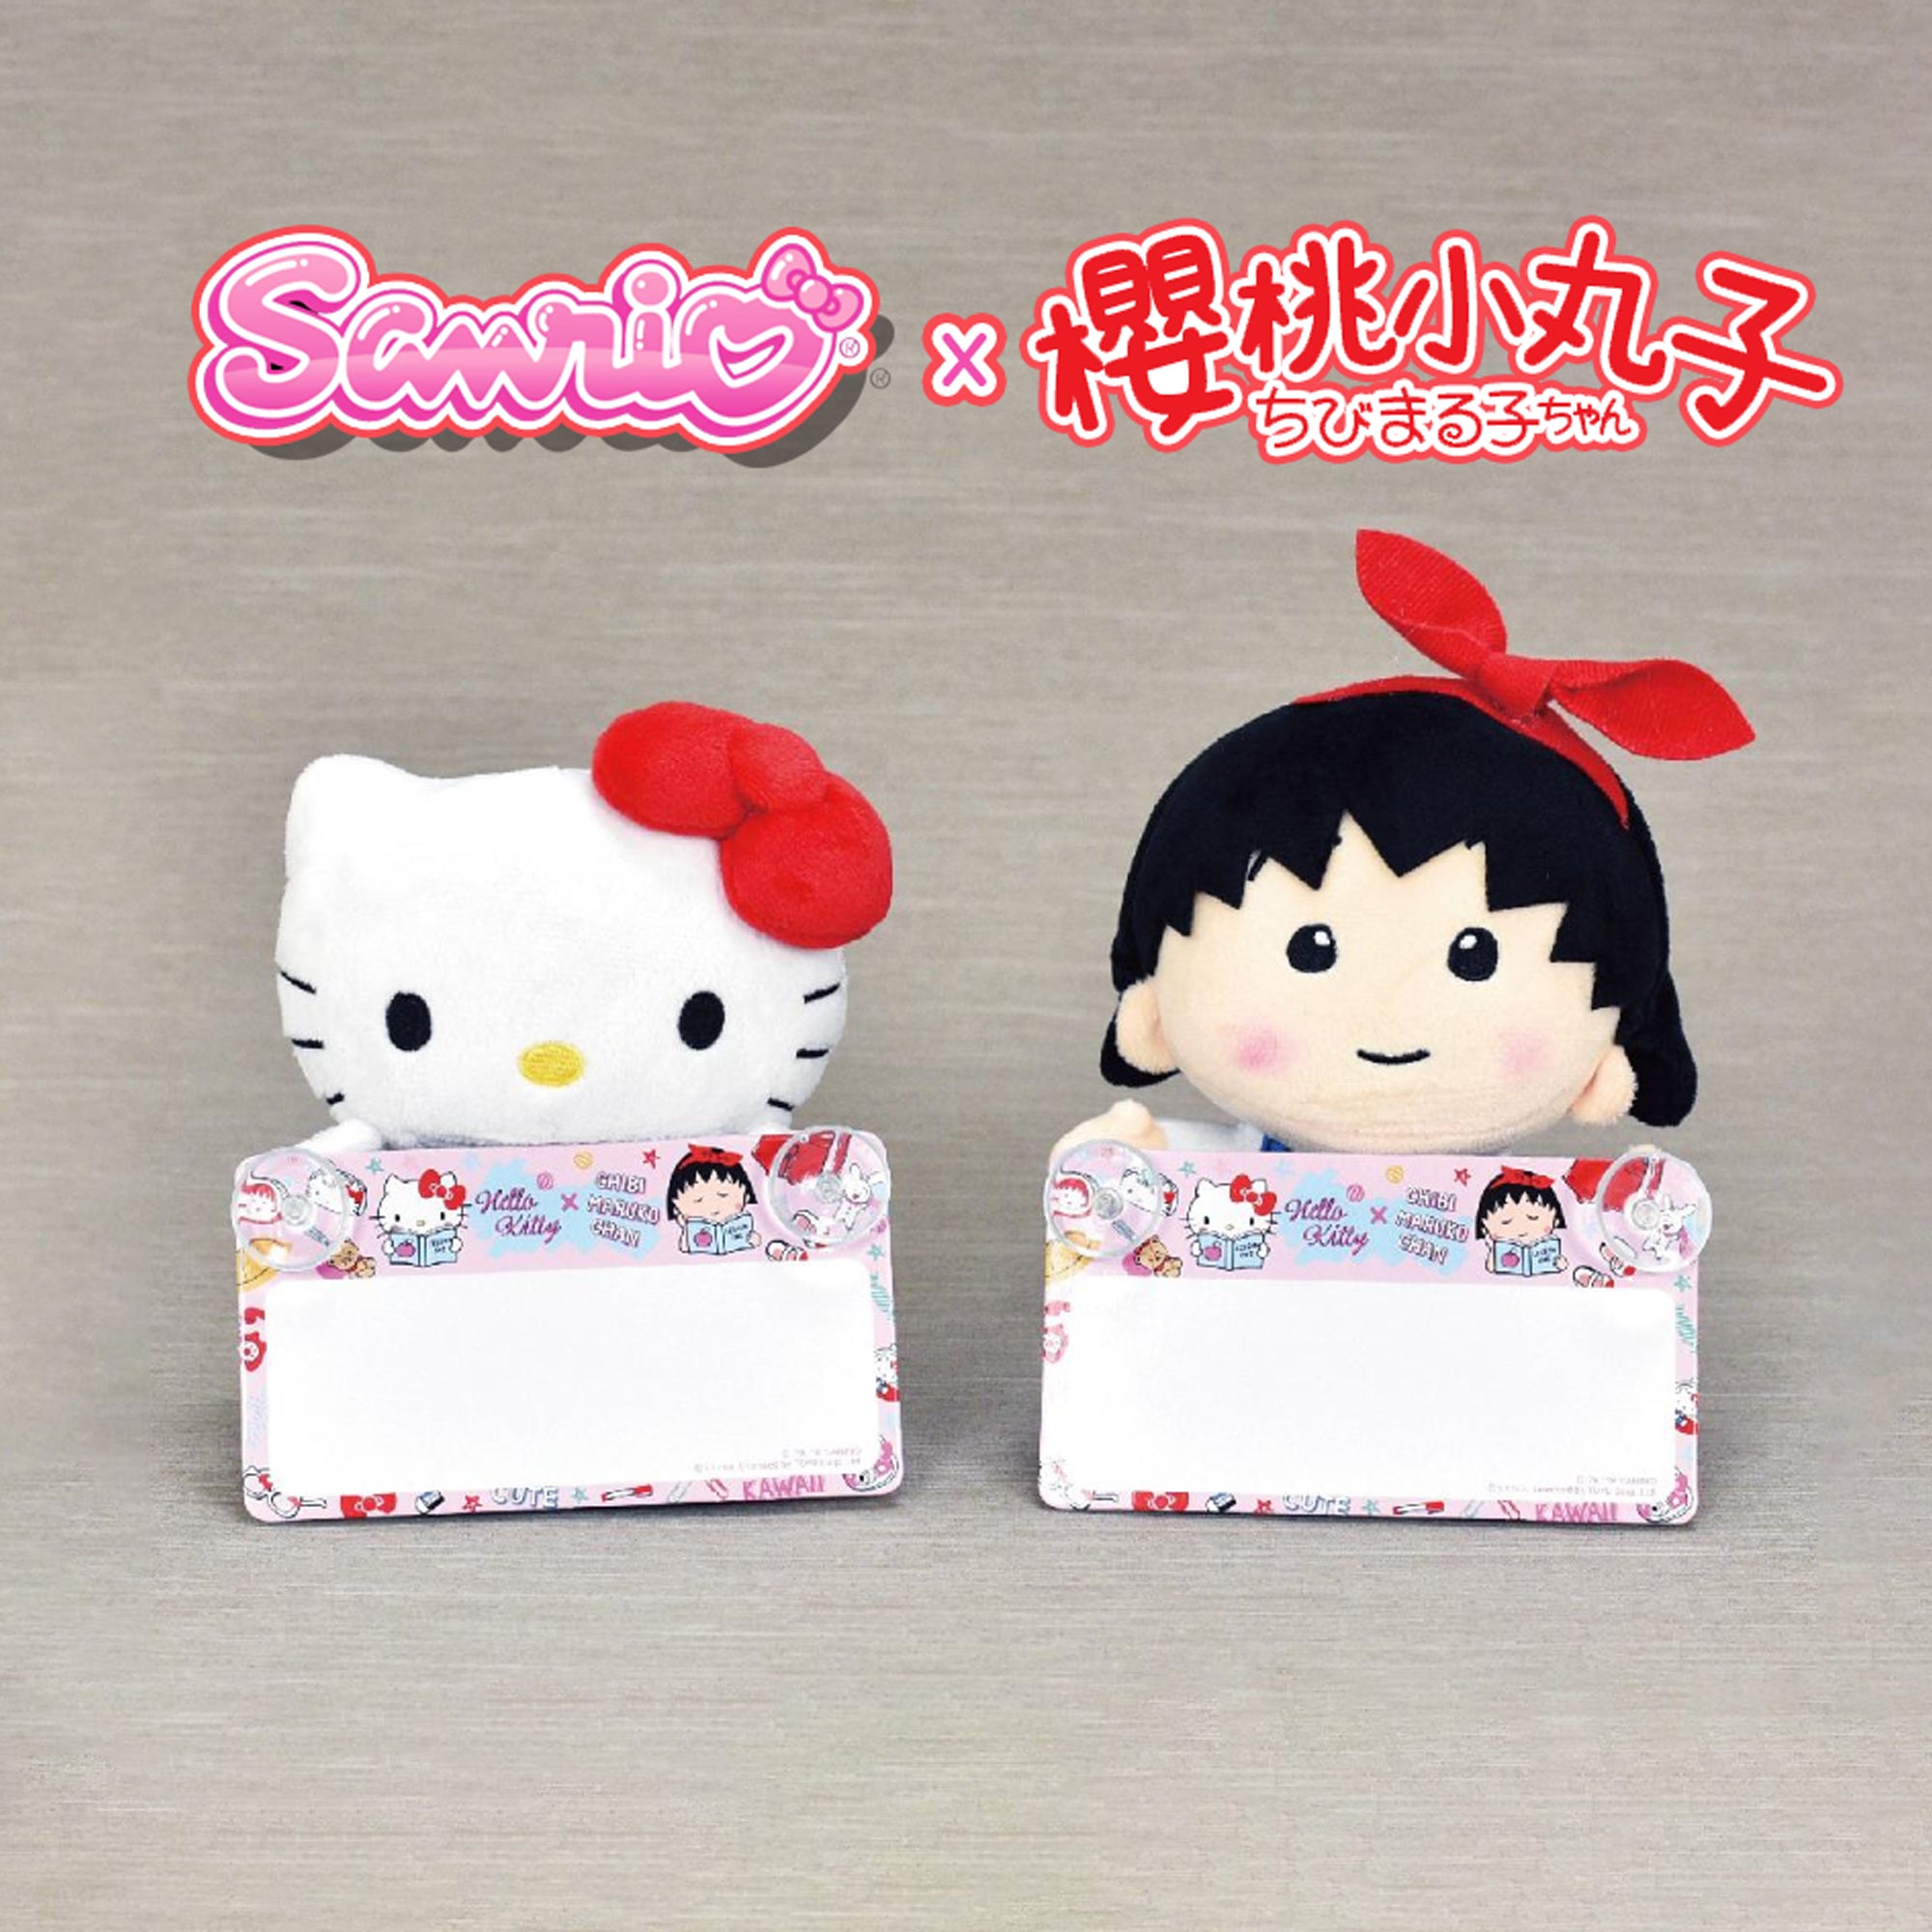 Sanrio x 櫻桃小丸子 - Hello Kitty&小丸子留言板公仔